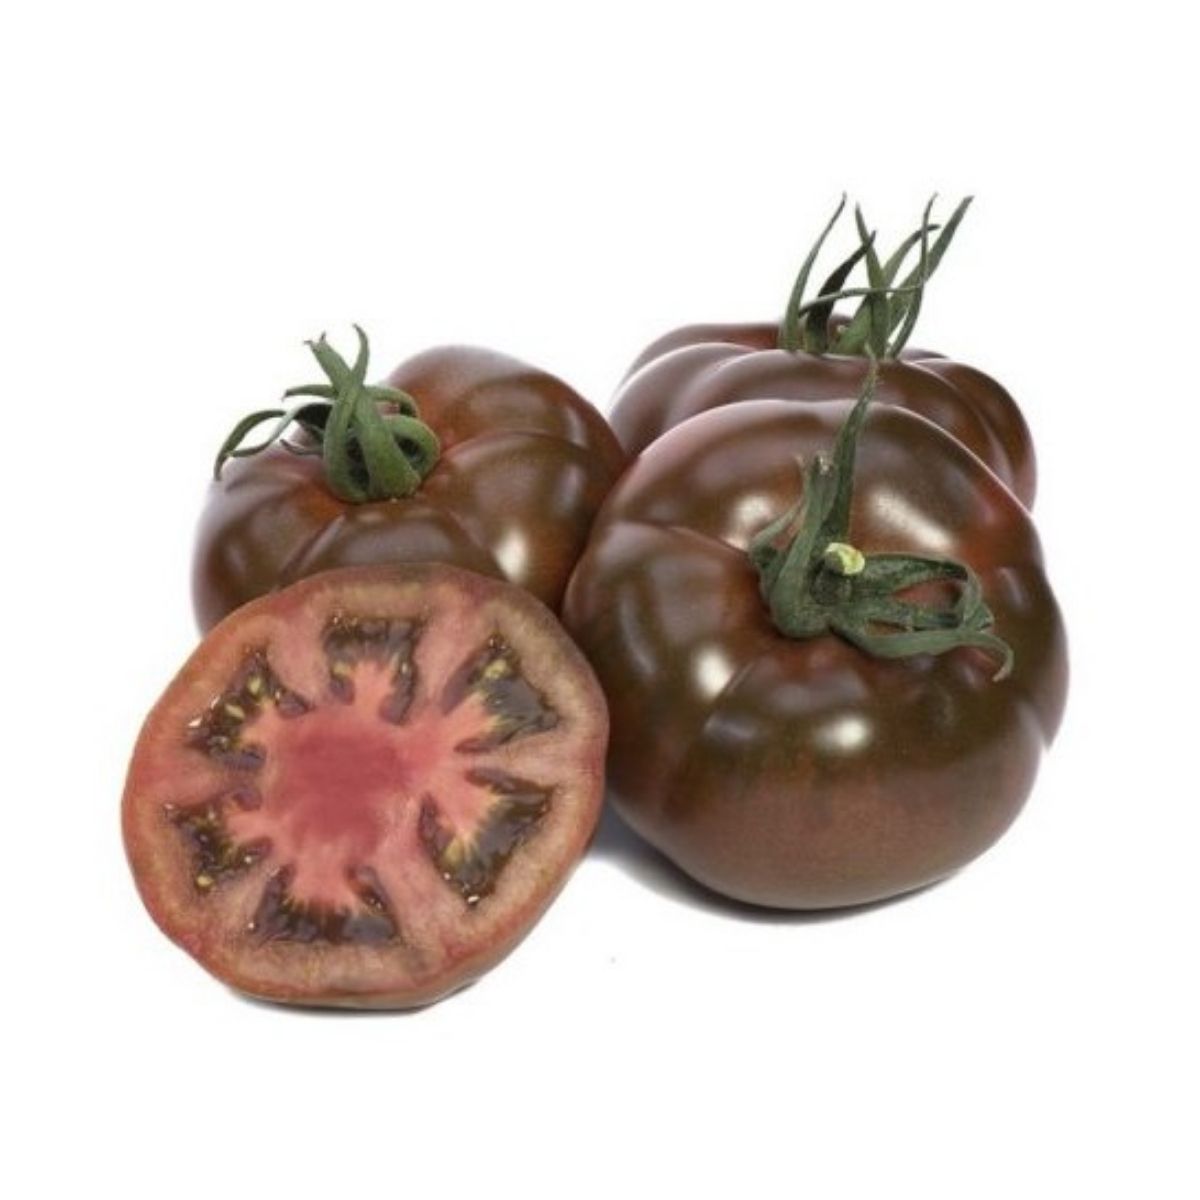 Tomate - Seminte de tomate BIG SACHER F1, 250 seminte, YUKSEL, hectarul.ro